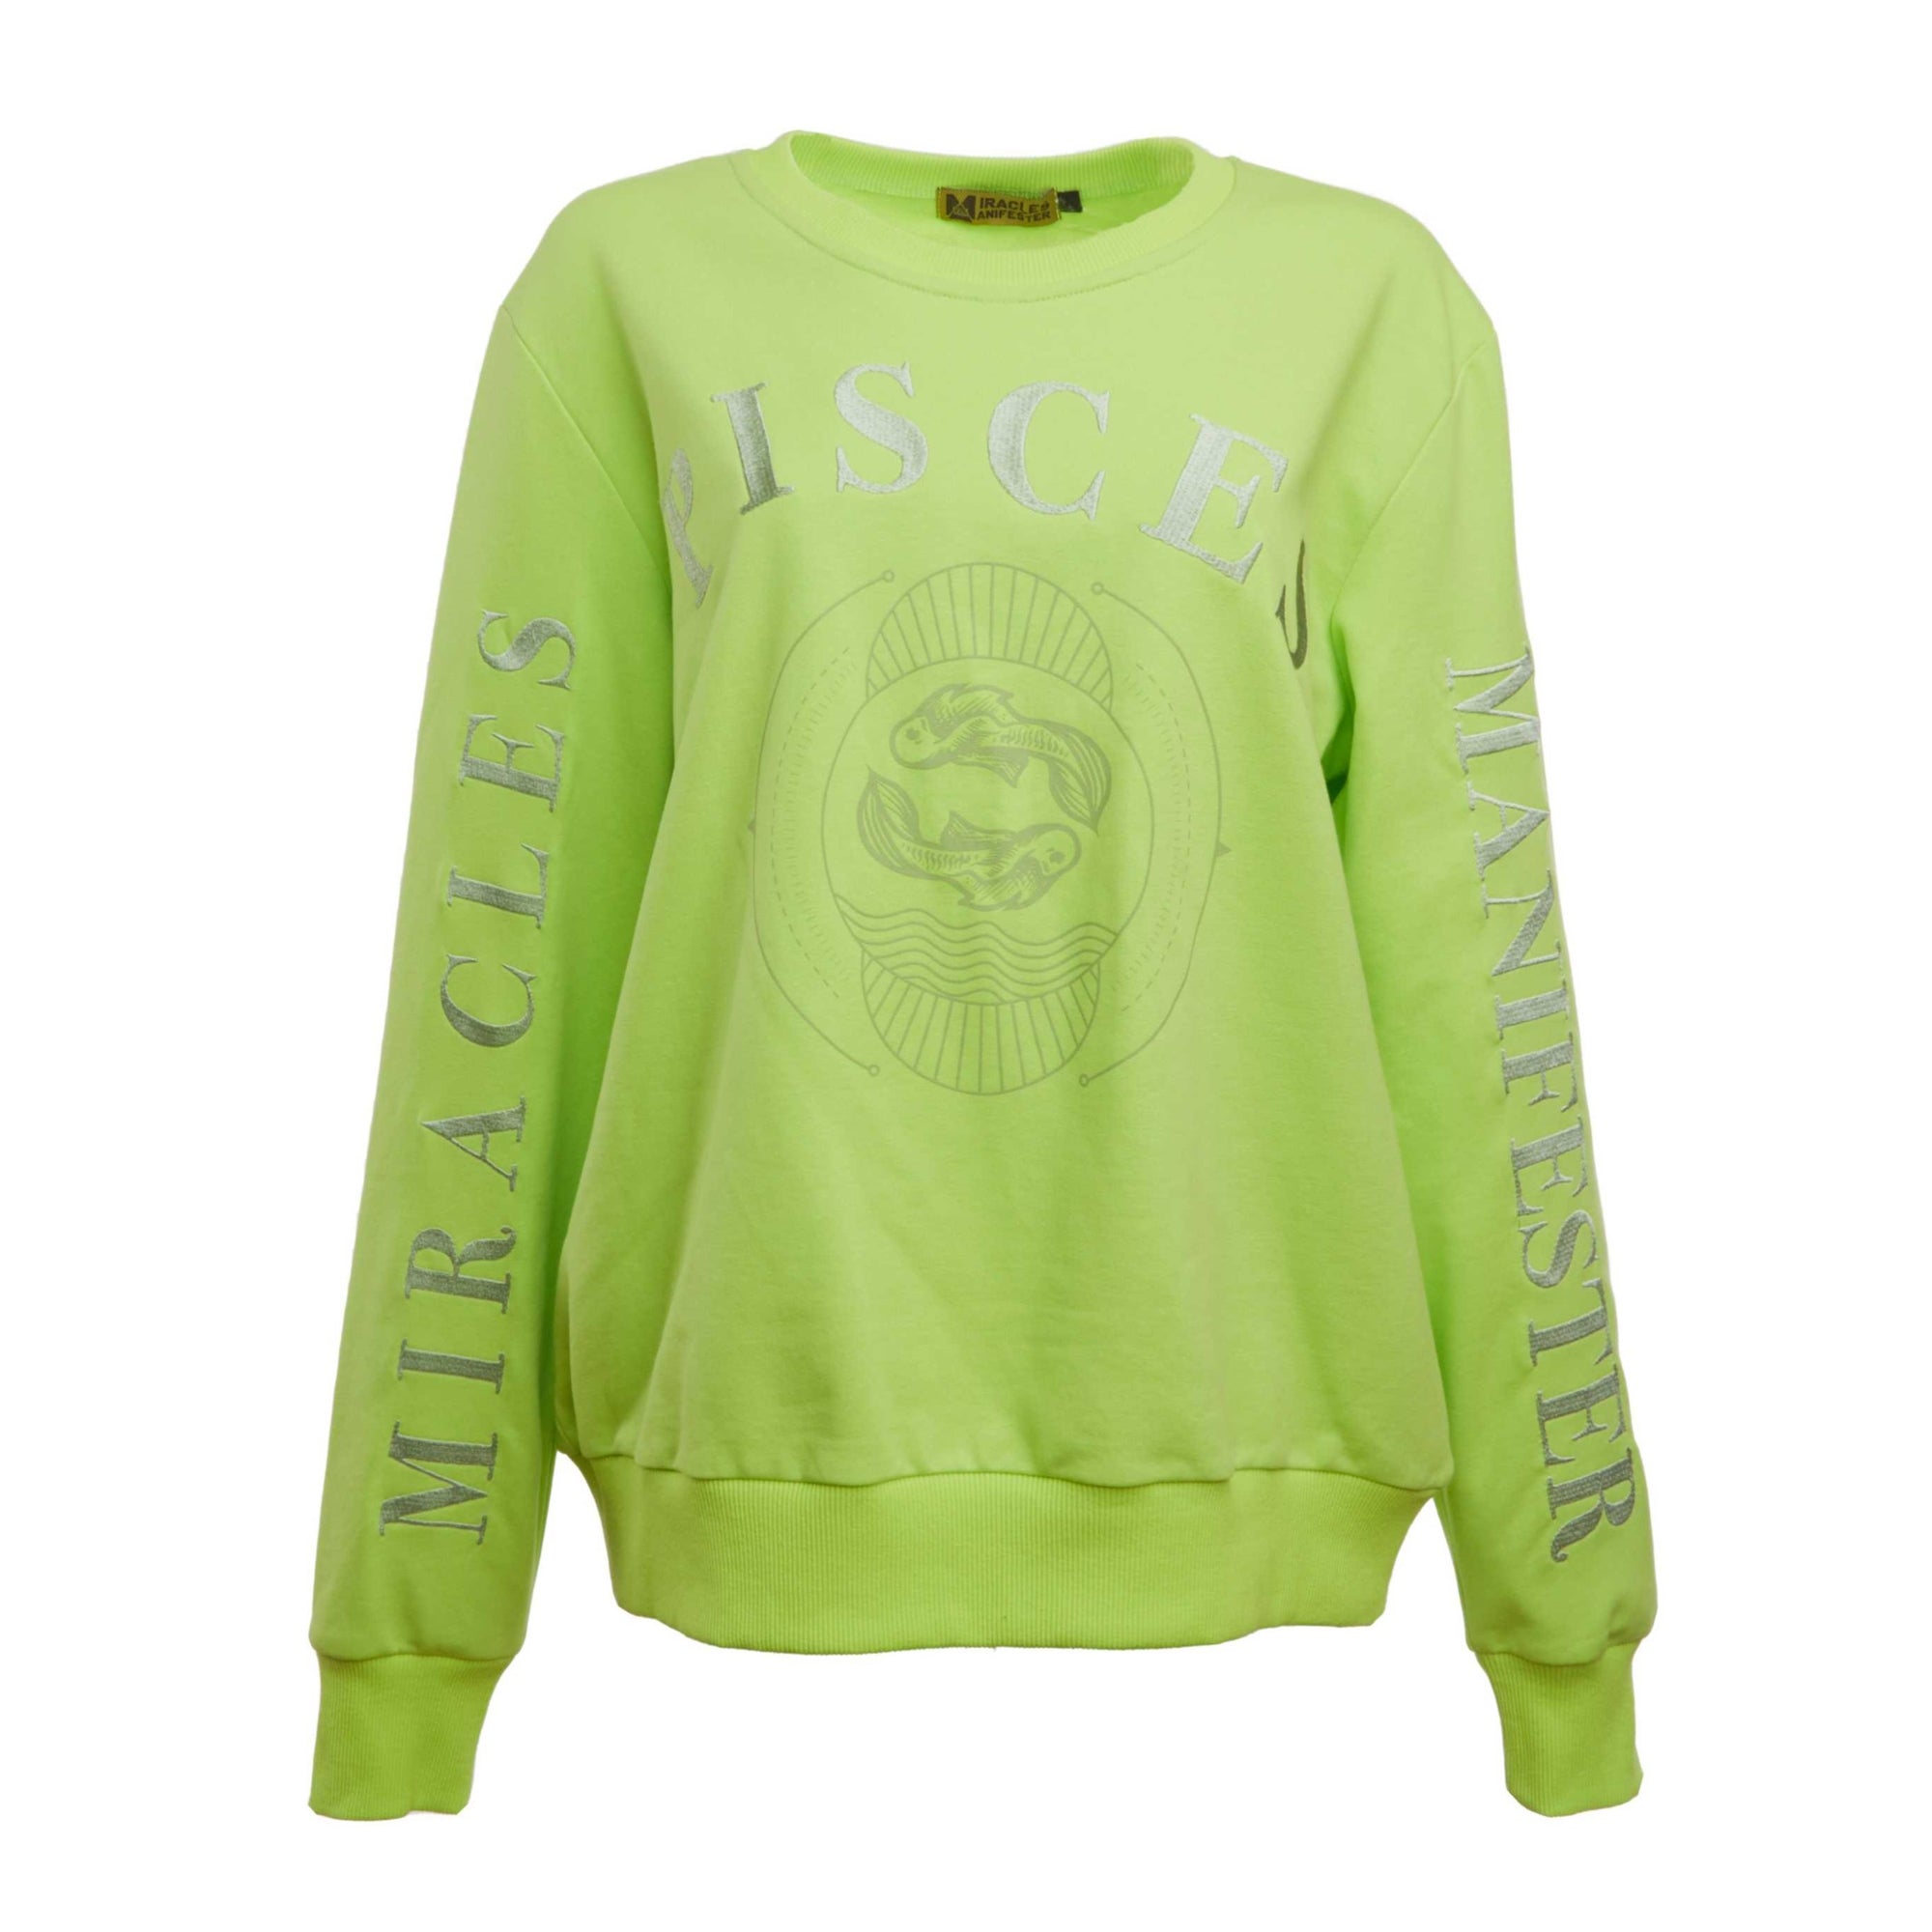 Embroidered Pisces Zodiac Sign Sweatshirt - Neon Green